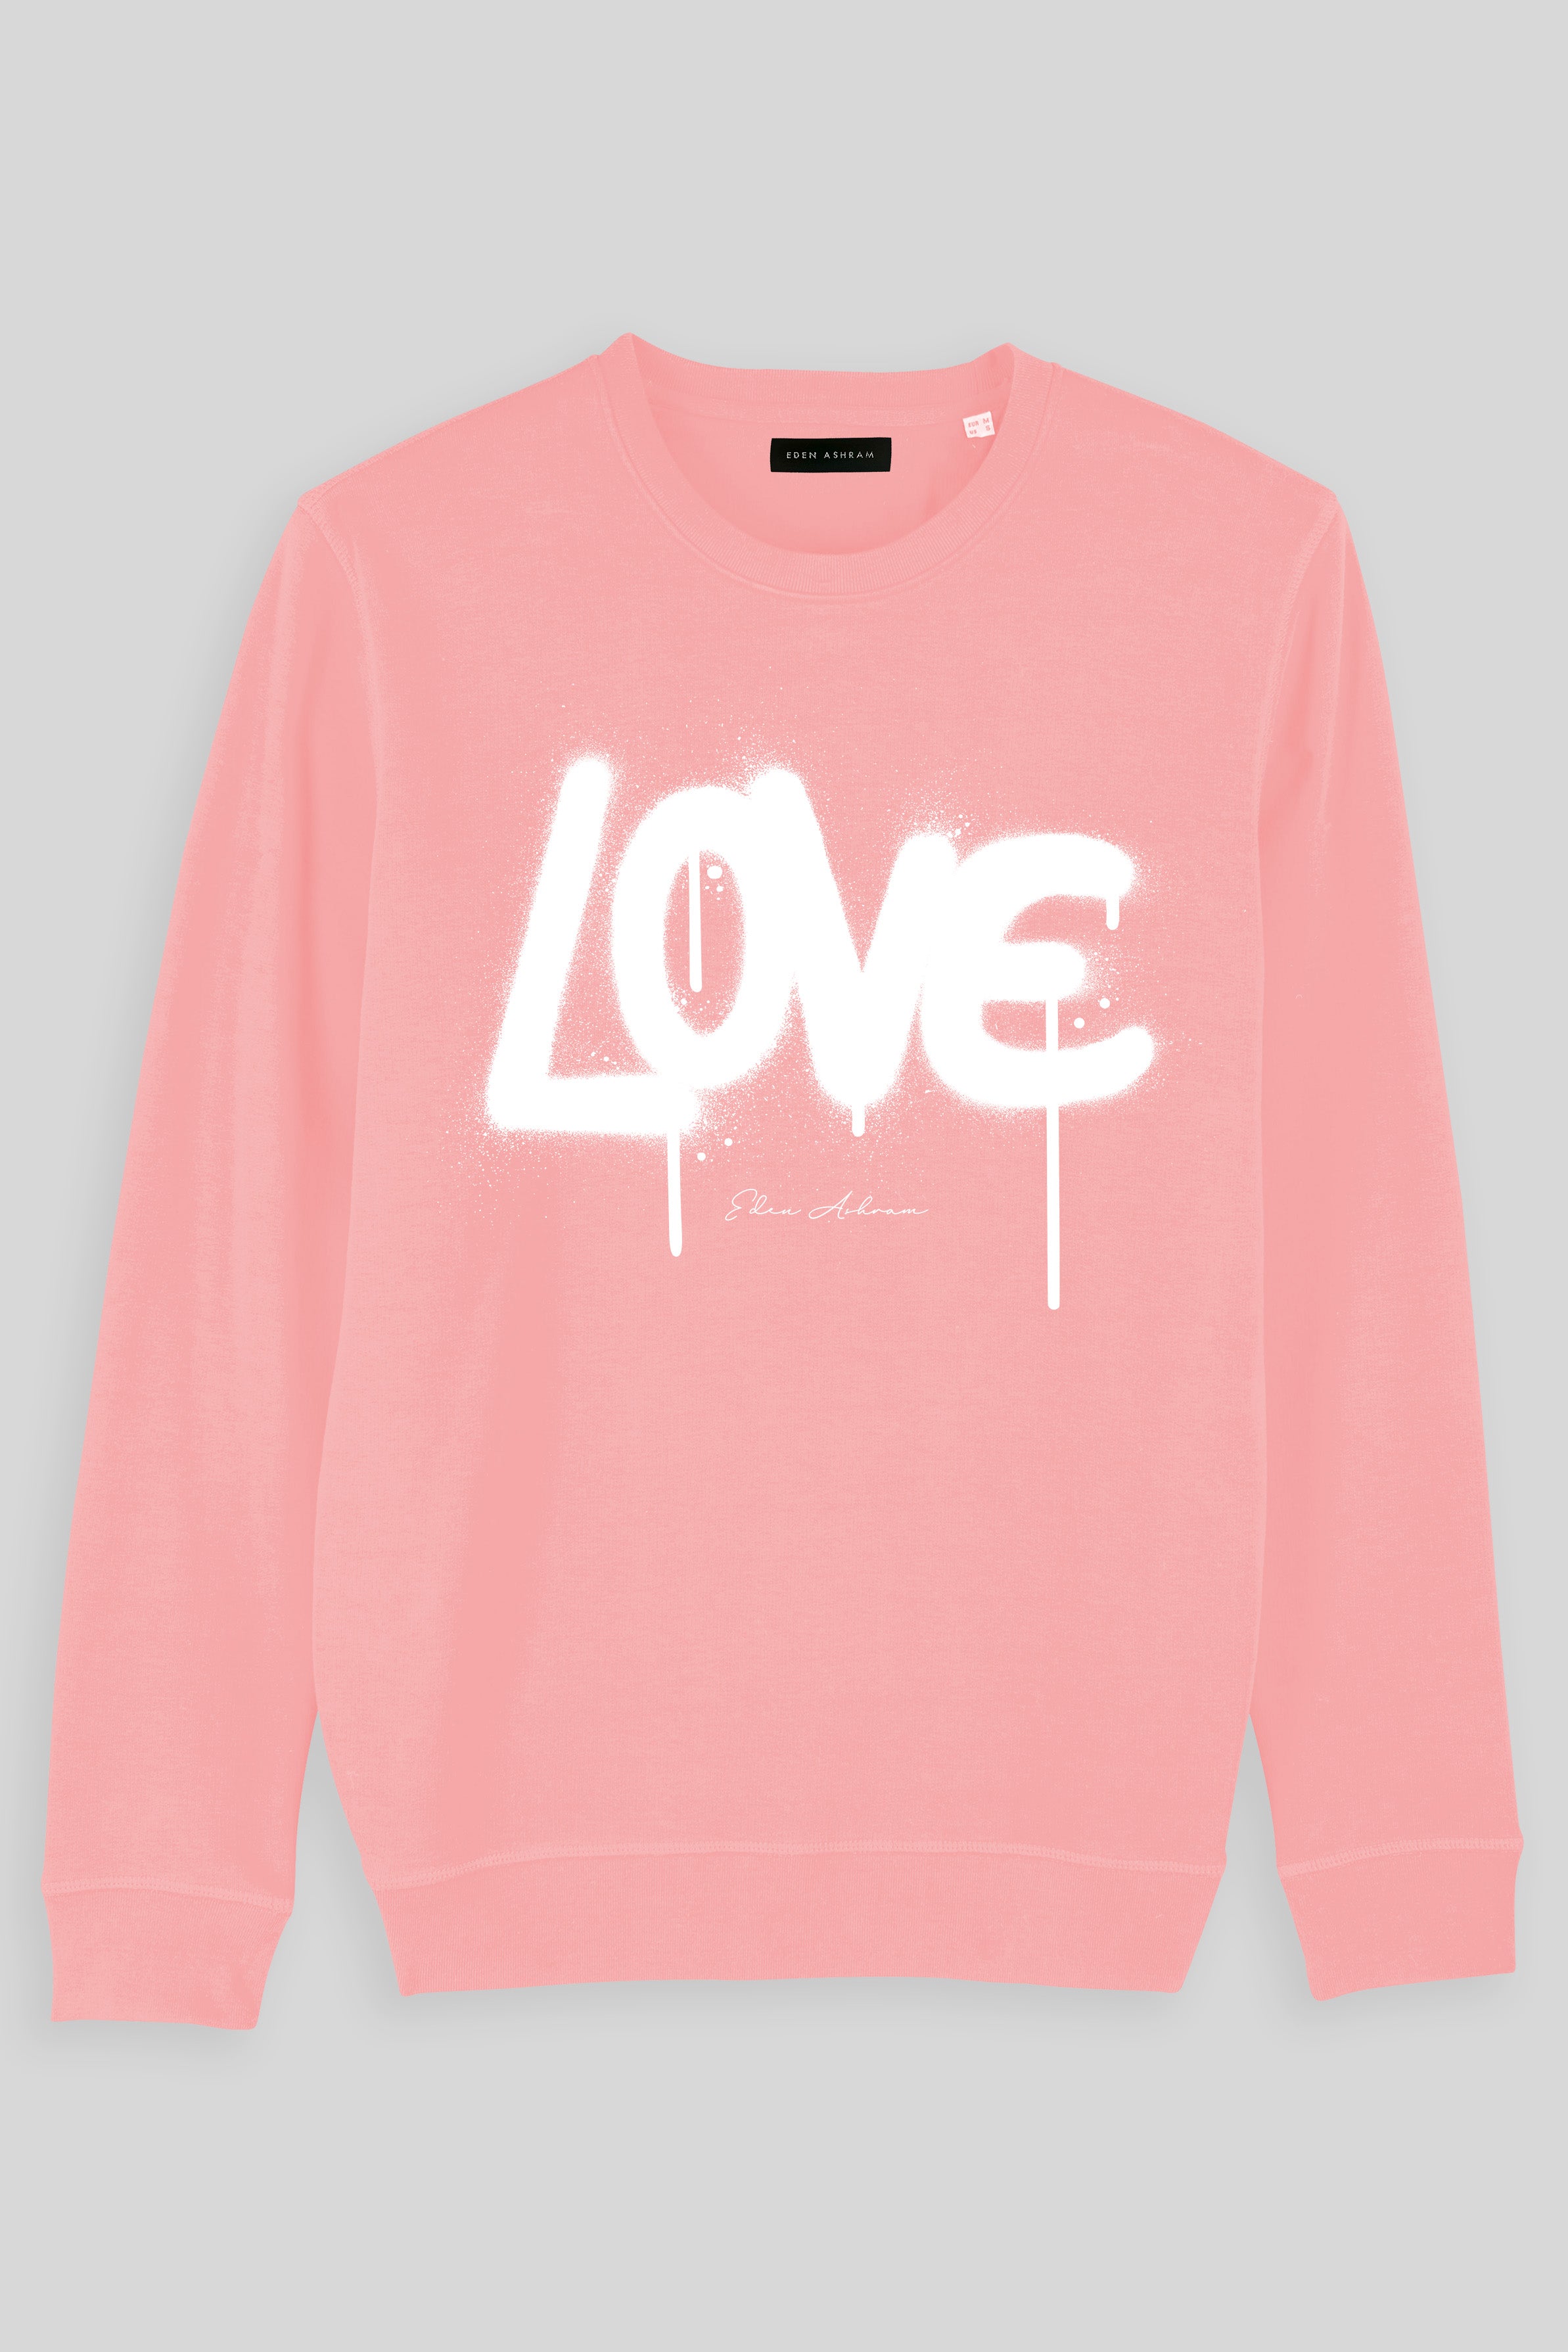 Eden Ashram Graffiti Love Premium Crew Neck Sweatshirt Coral Pink